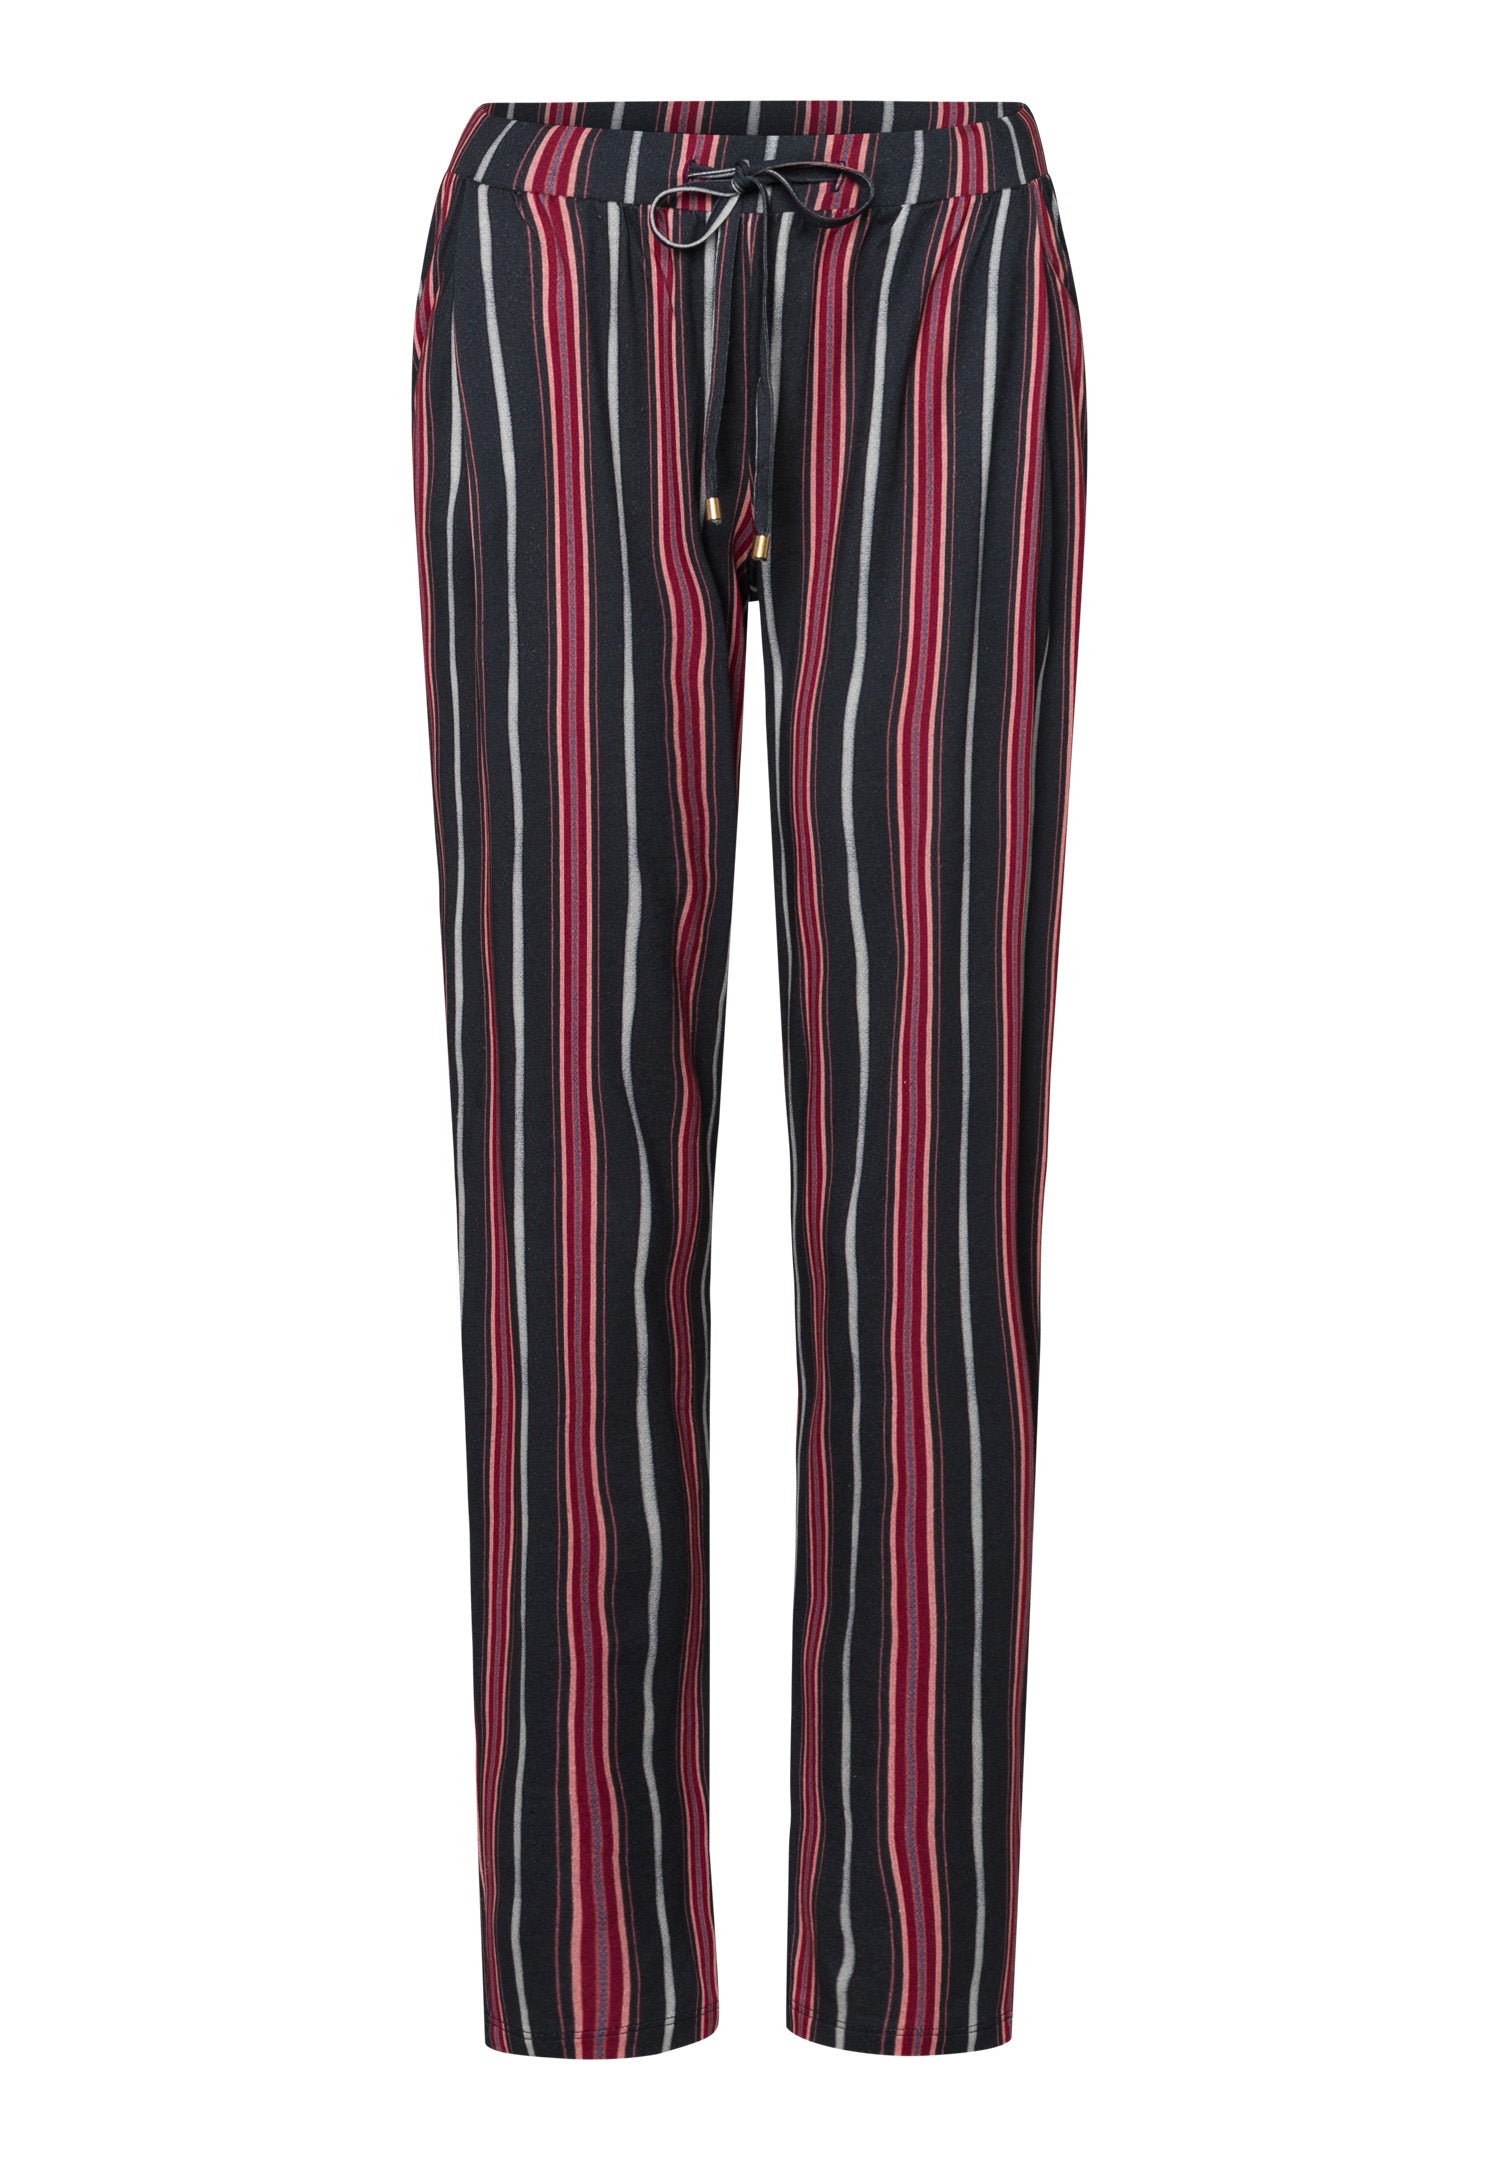 77882 Sleep And Lounge Knit Pants Print - 2984 Marsala Stripe